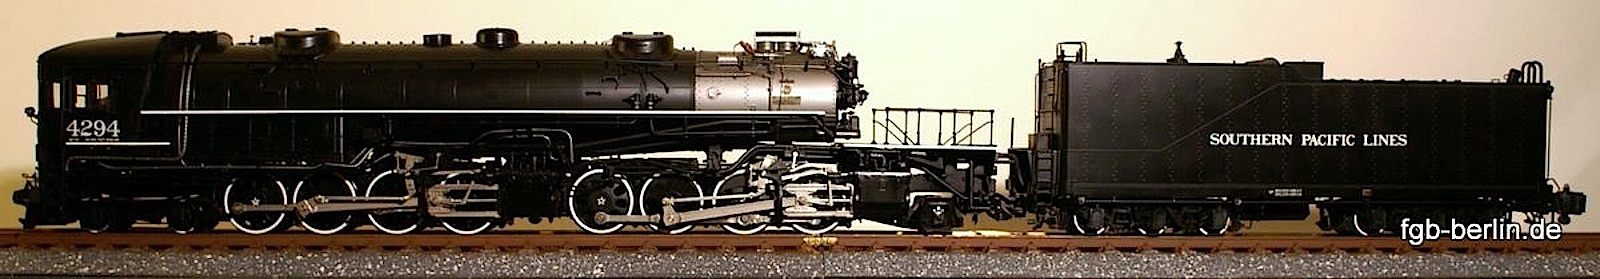 SP AC-12 Dampflok (Steam locomotive) Cab Forward 4294